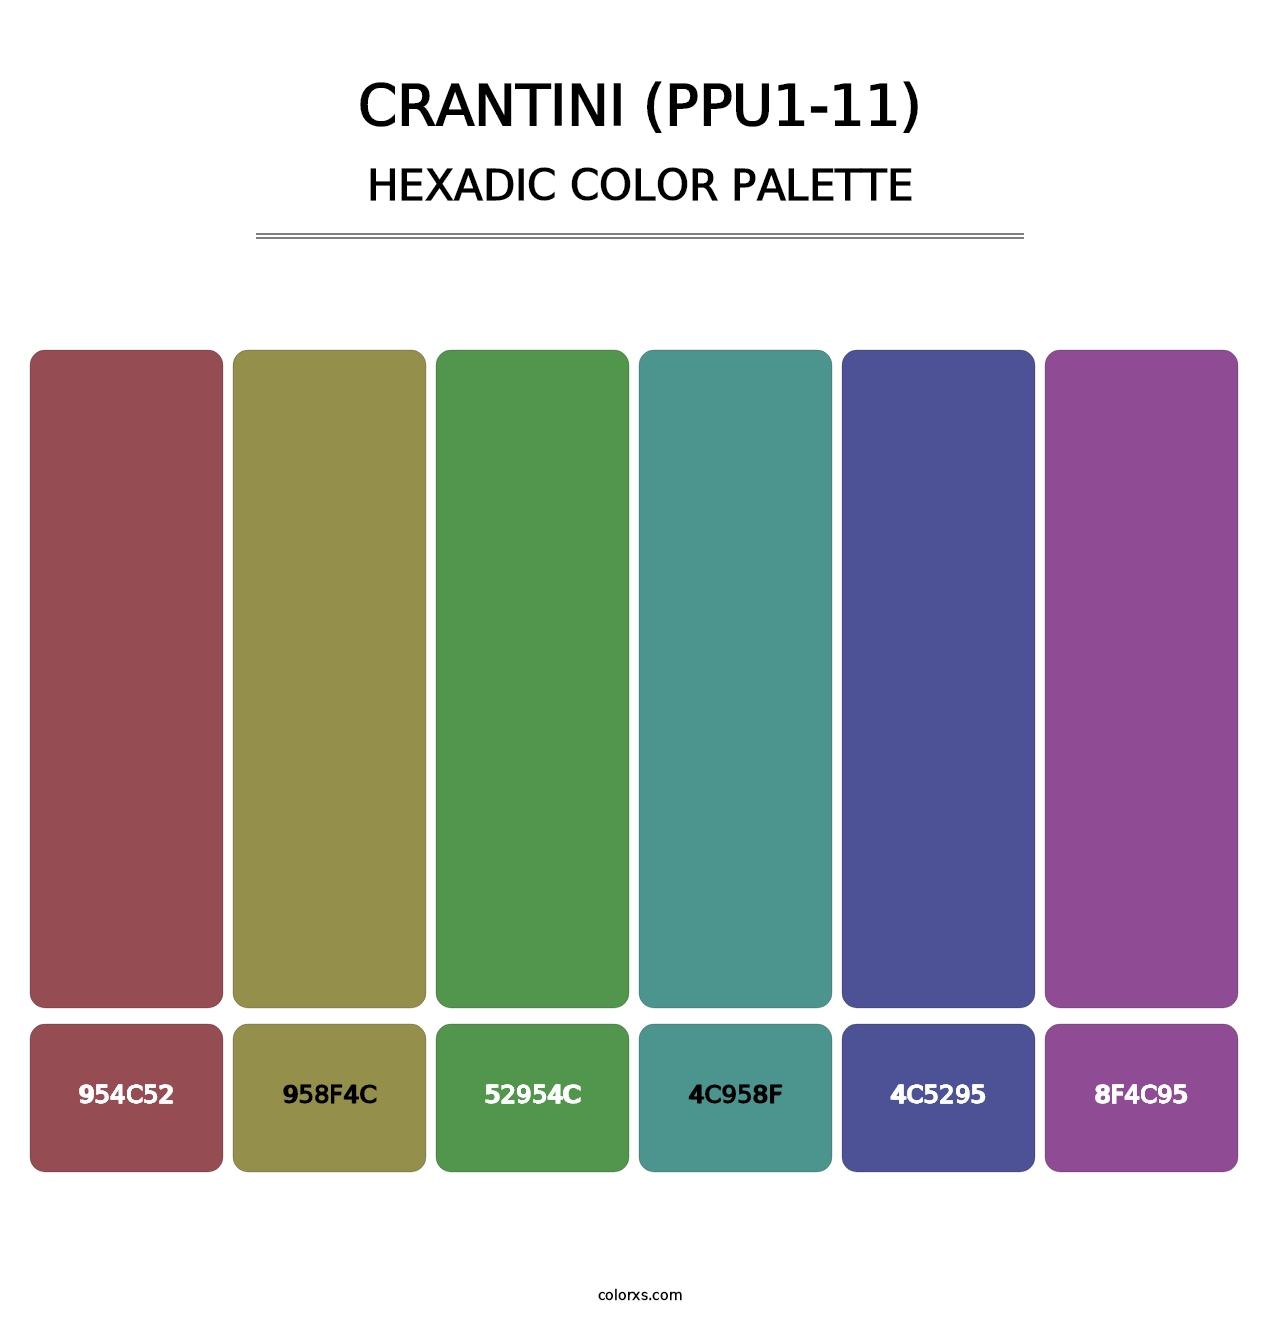 Crantini (PPU1-11) - Hexadic Color Palette